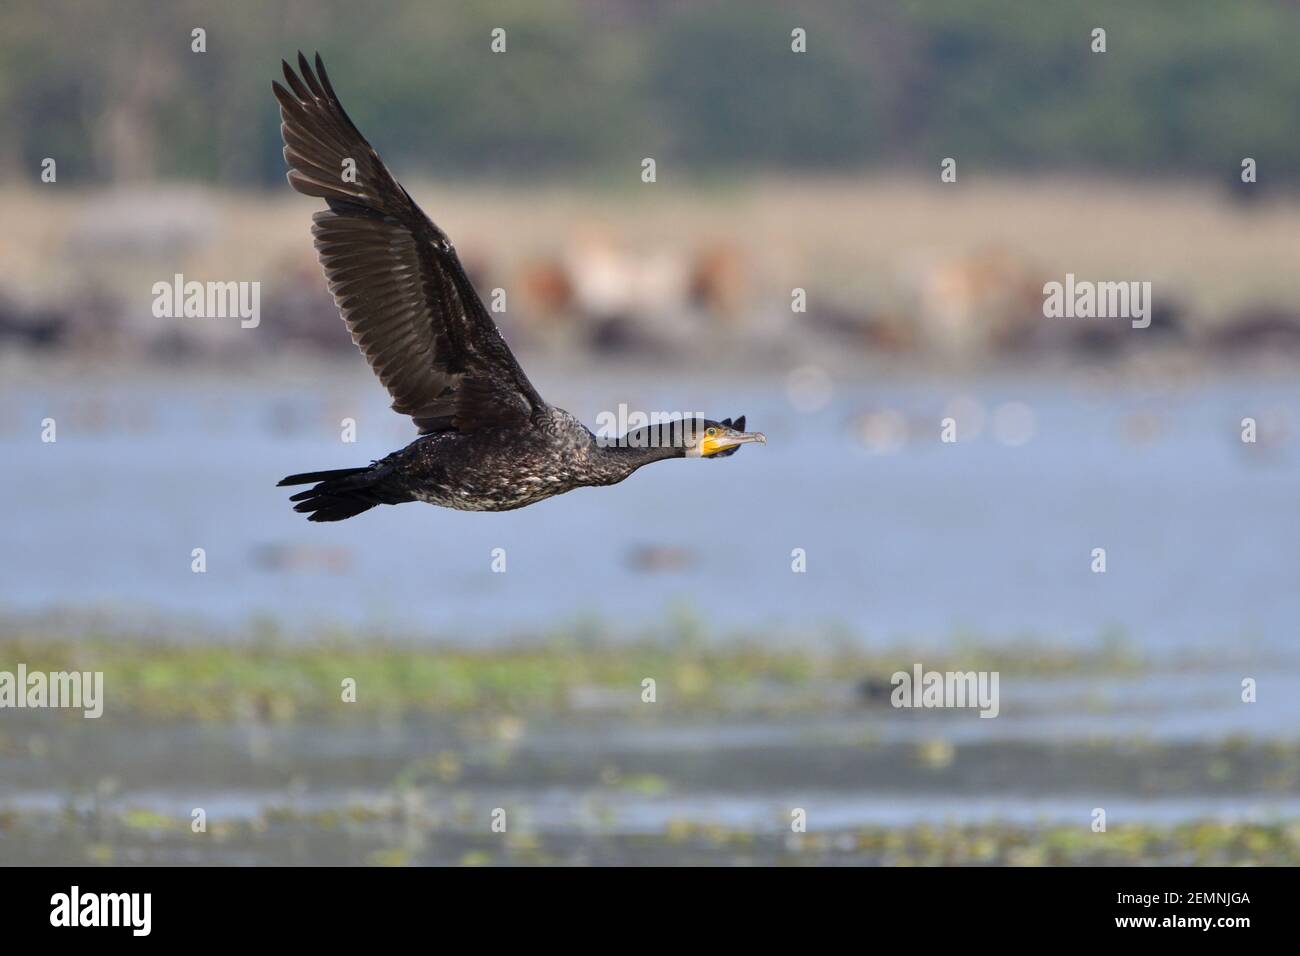 Great Cormorant Bird Is Flying Over The Wetland Stock Photo